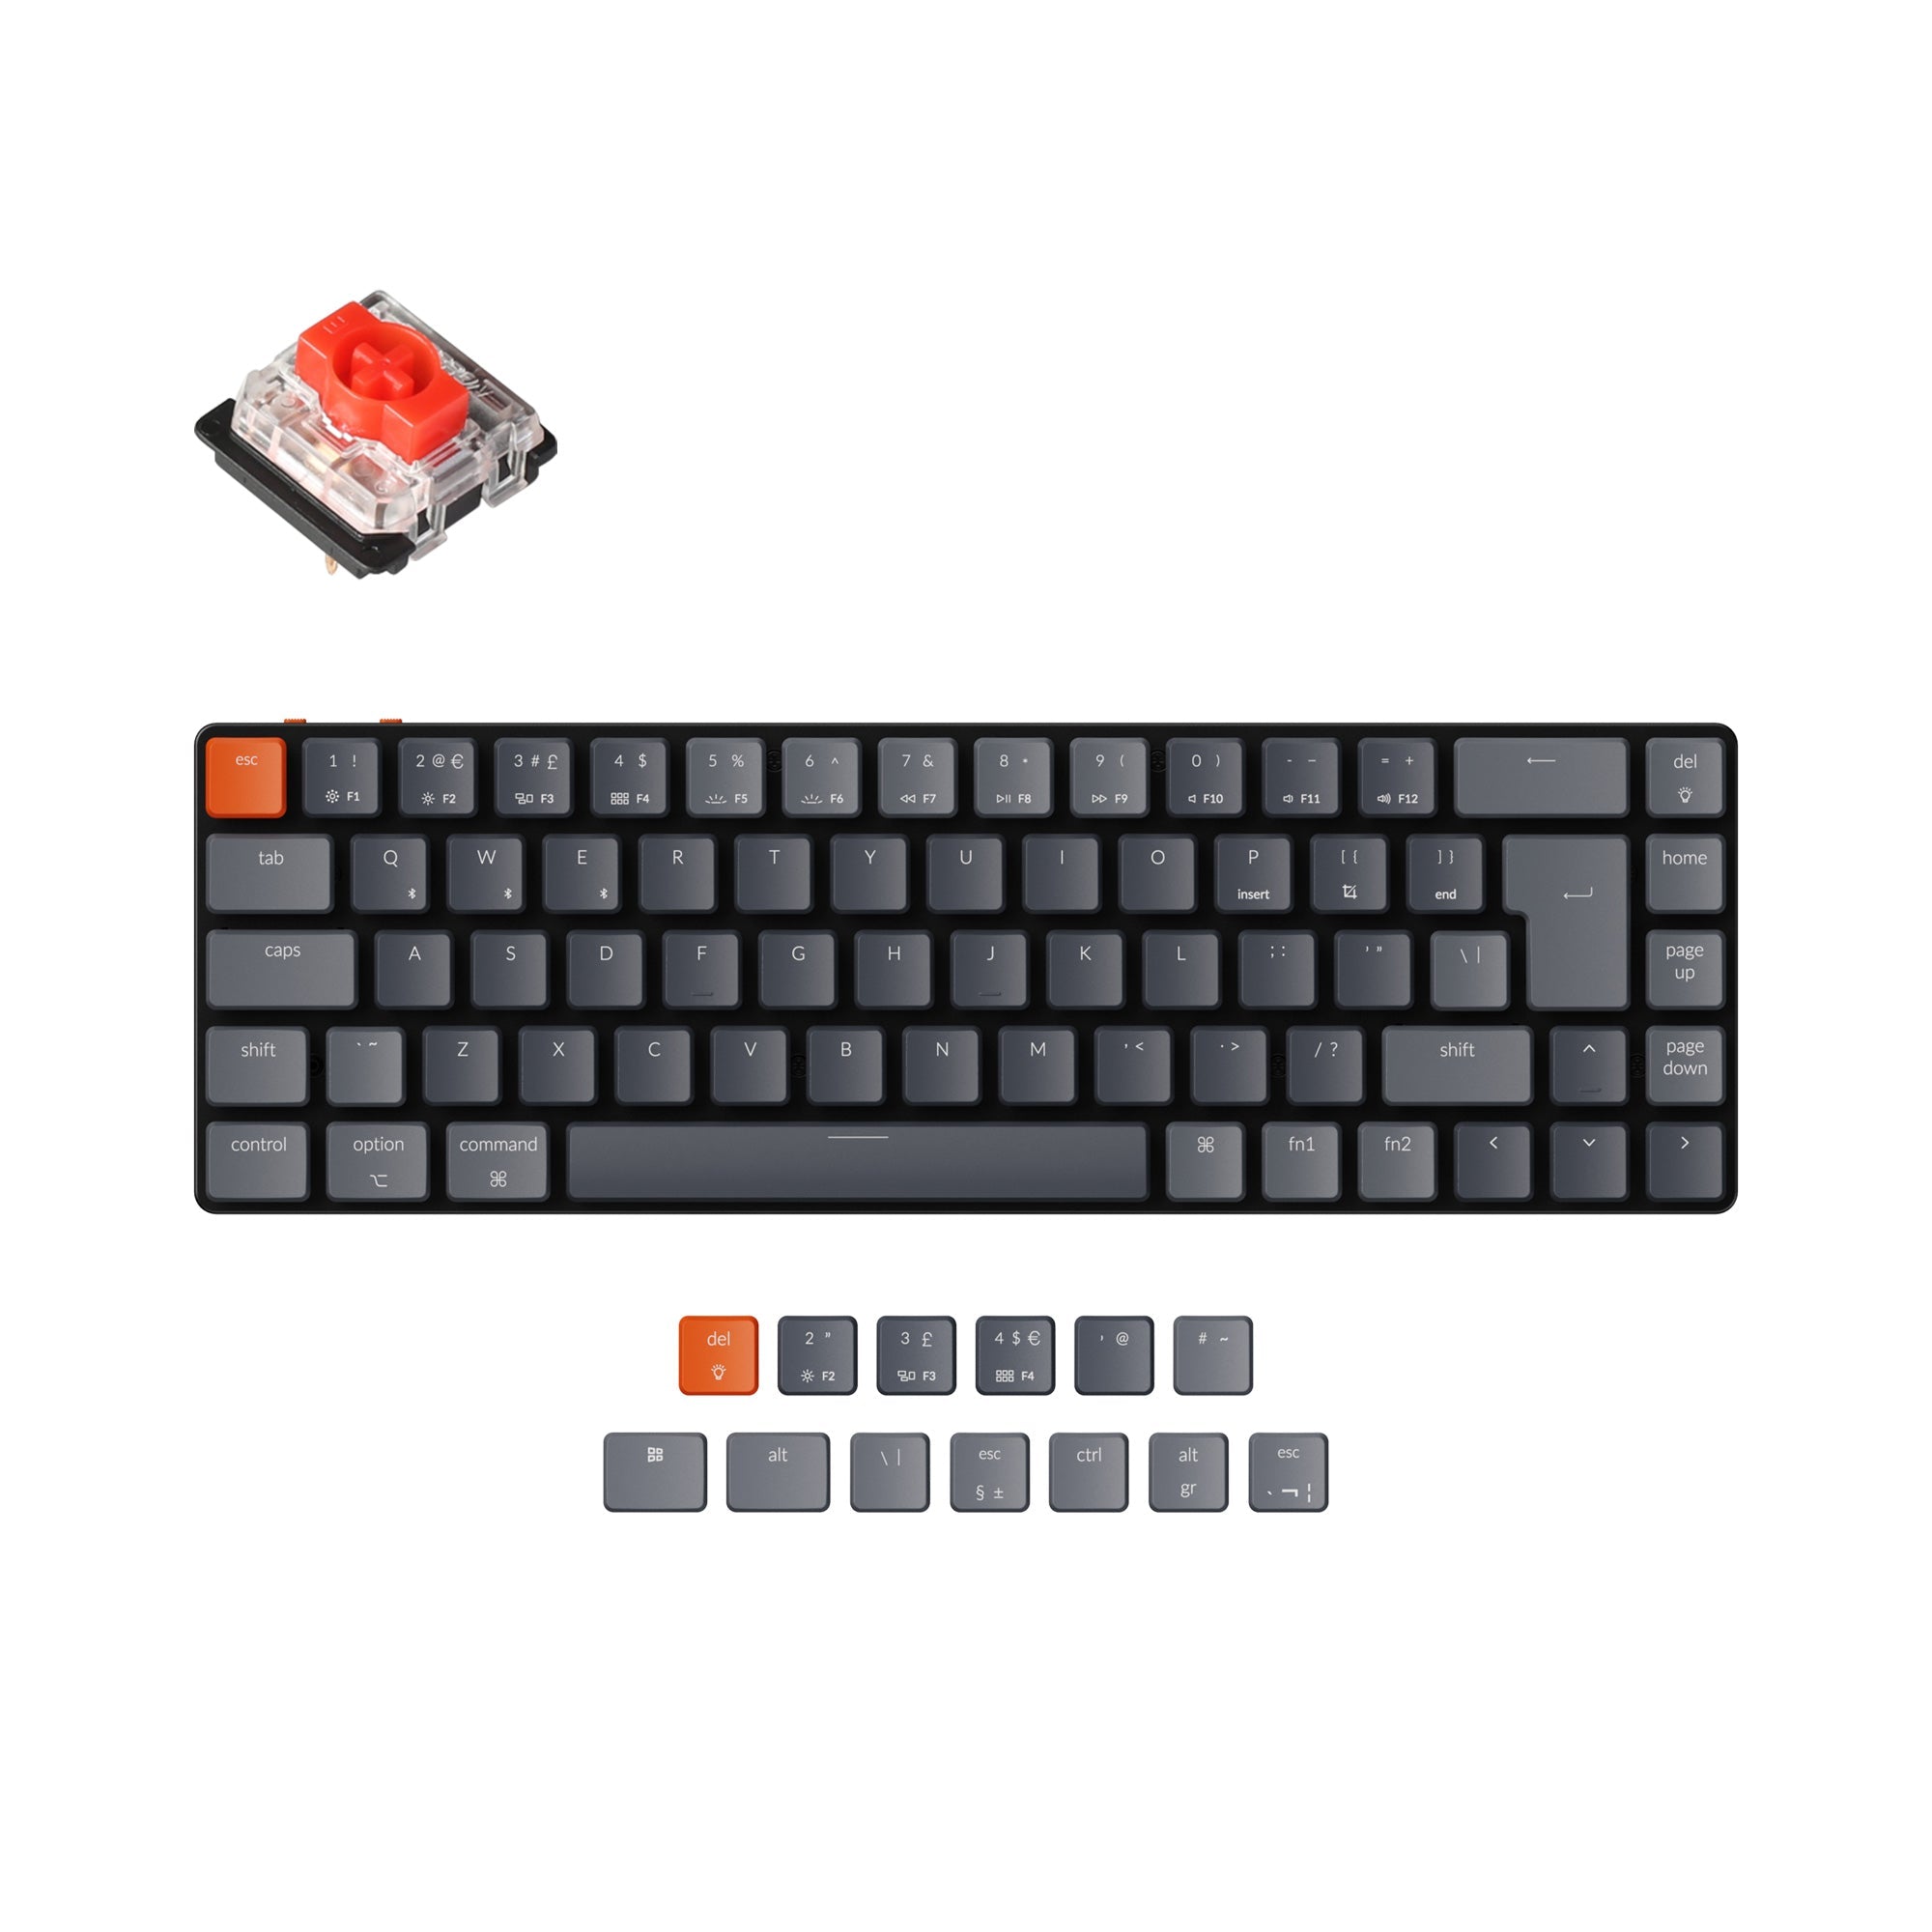 Keychron K7 ultra slim compact wireless mechanical keyboard for Mac Windows low profile Gateron red switch rgb backlight UK ISO layout